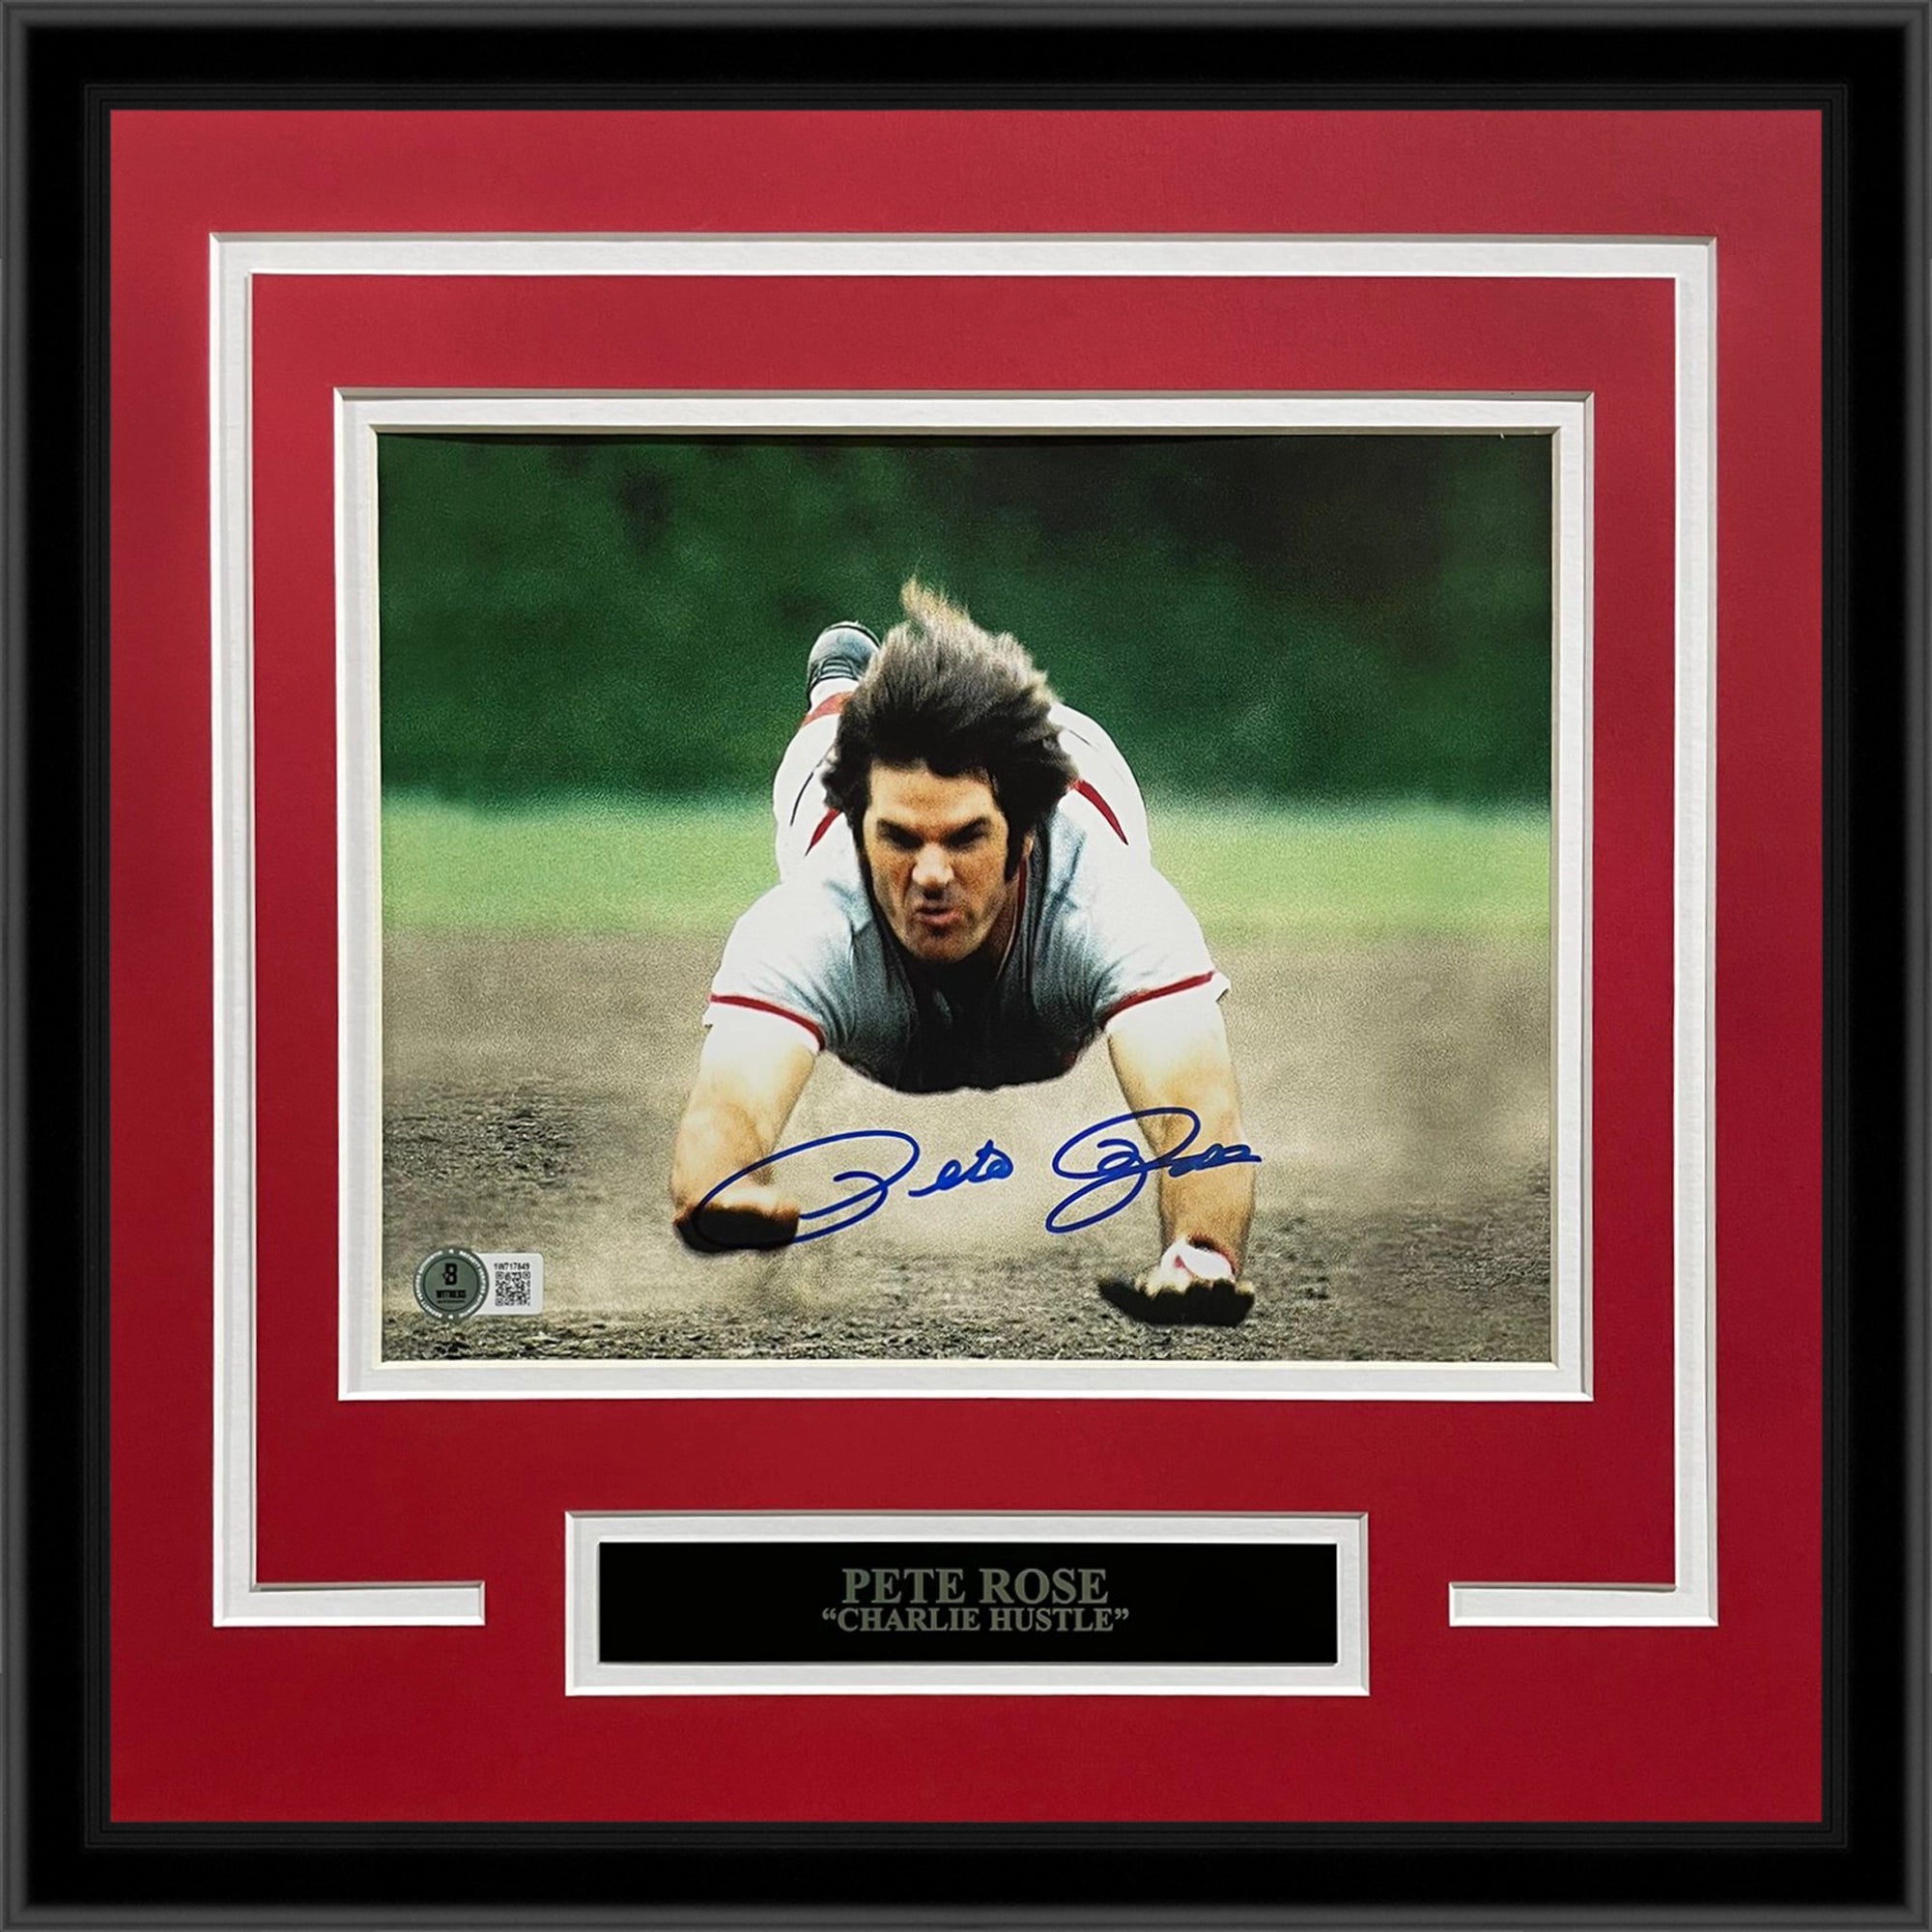 Pete Rose Autographed Cincinnati Reds (Head First Slide) Deluxe Framed 8x10 Photo - JSA